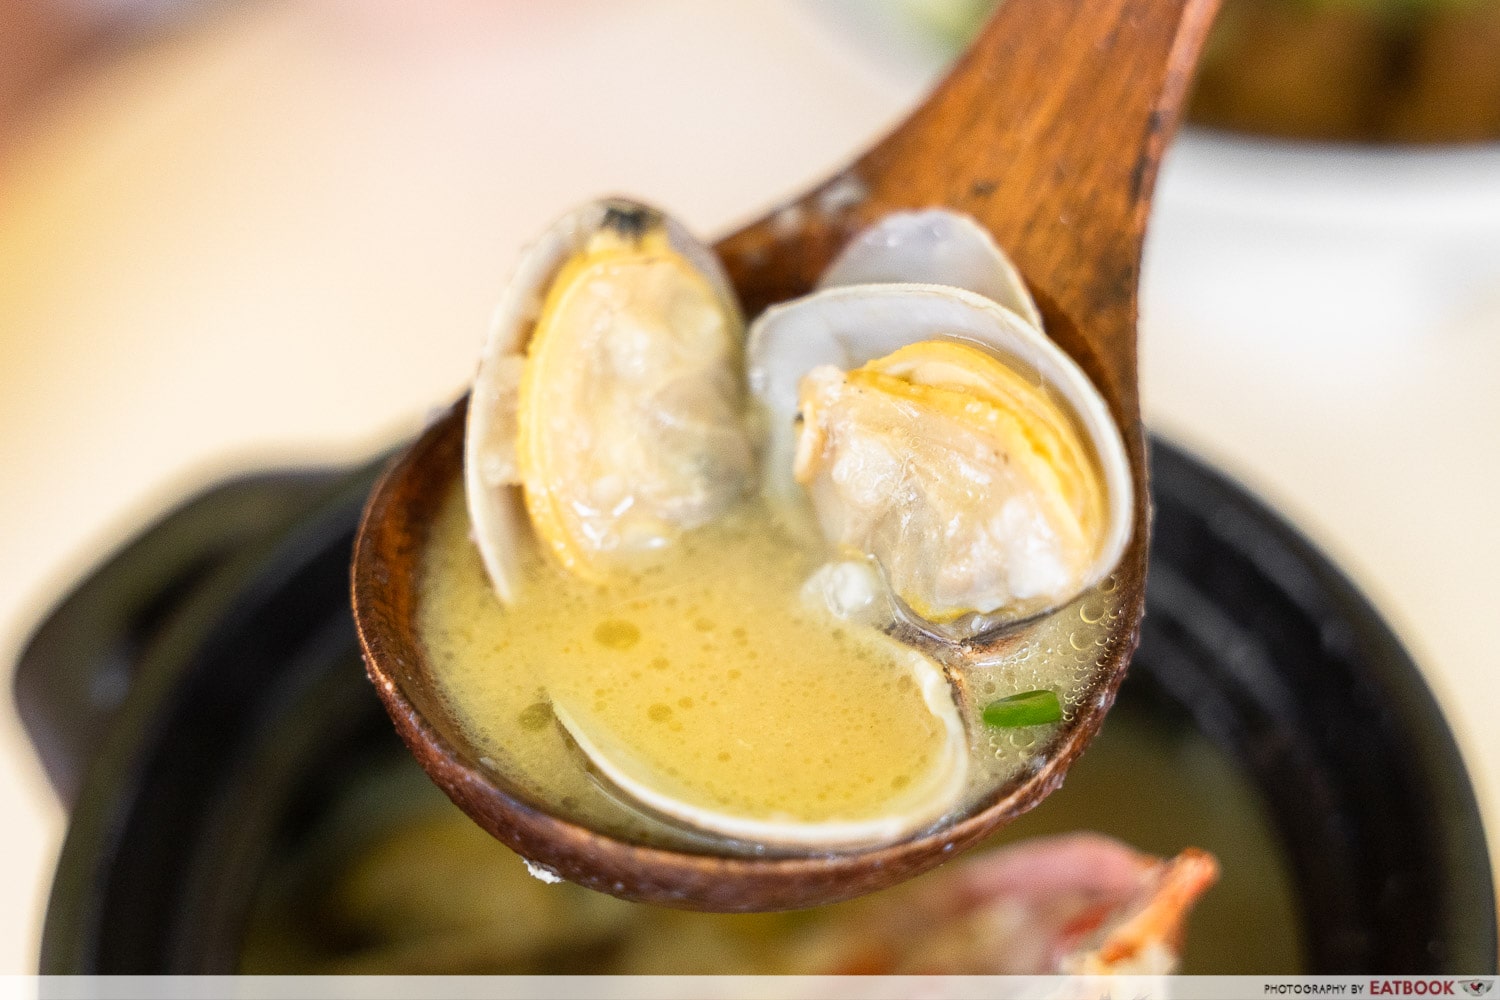 teochew fish soup - clams